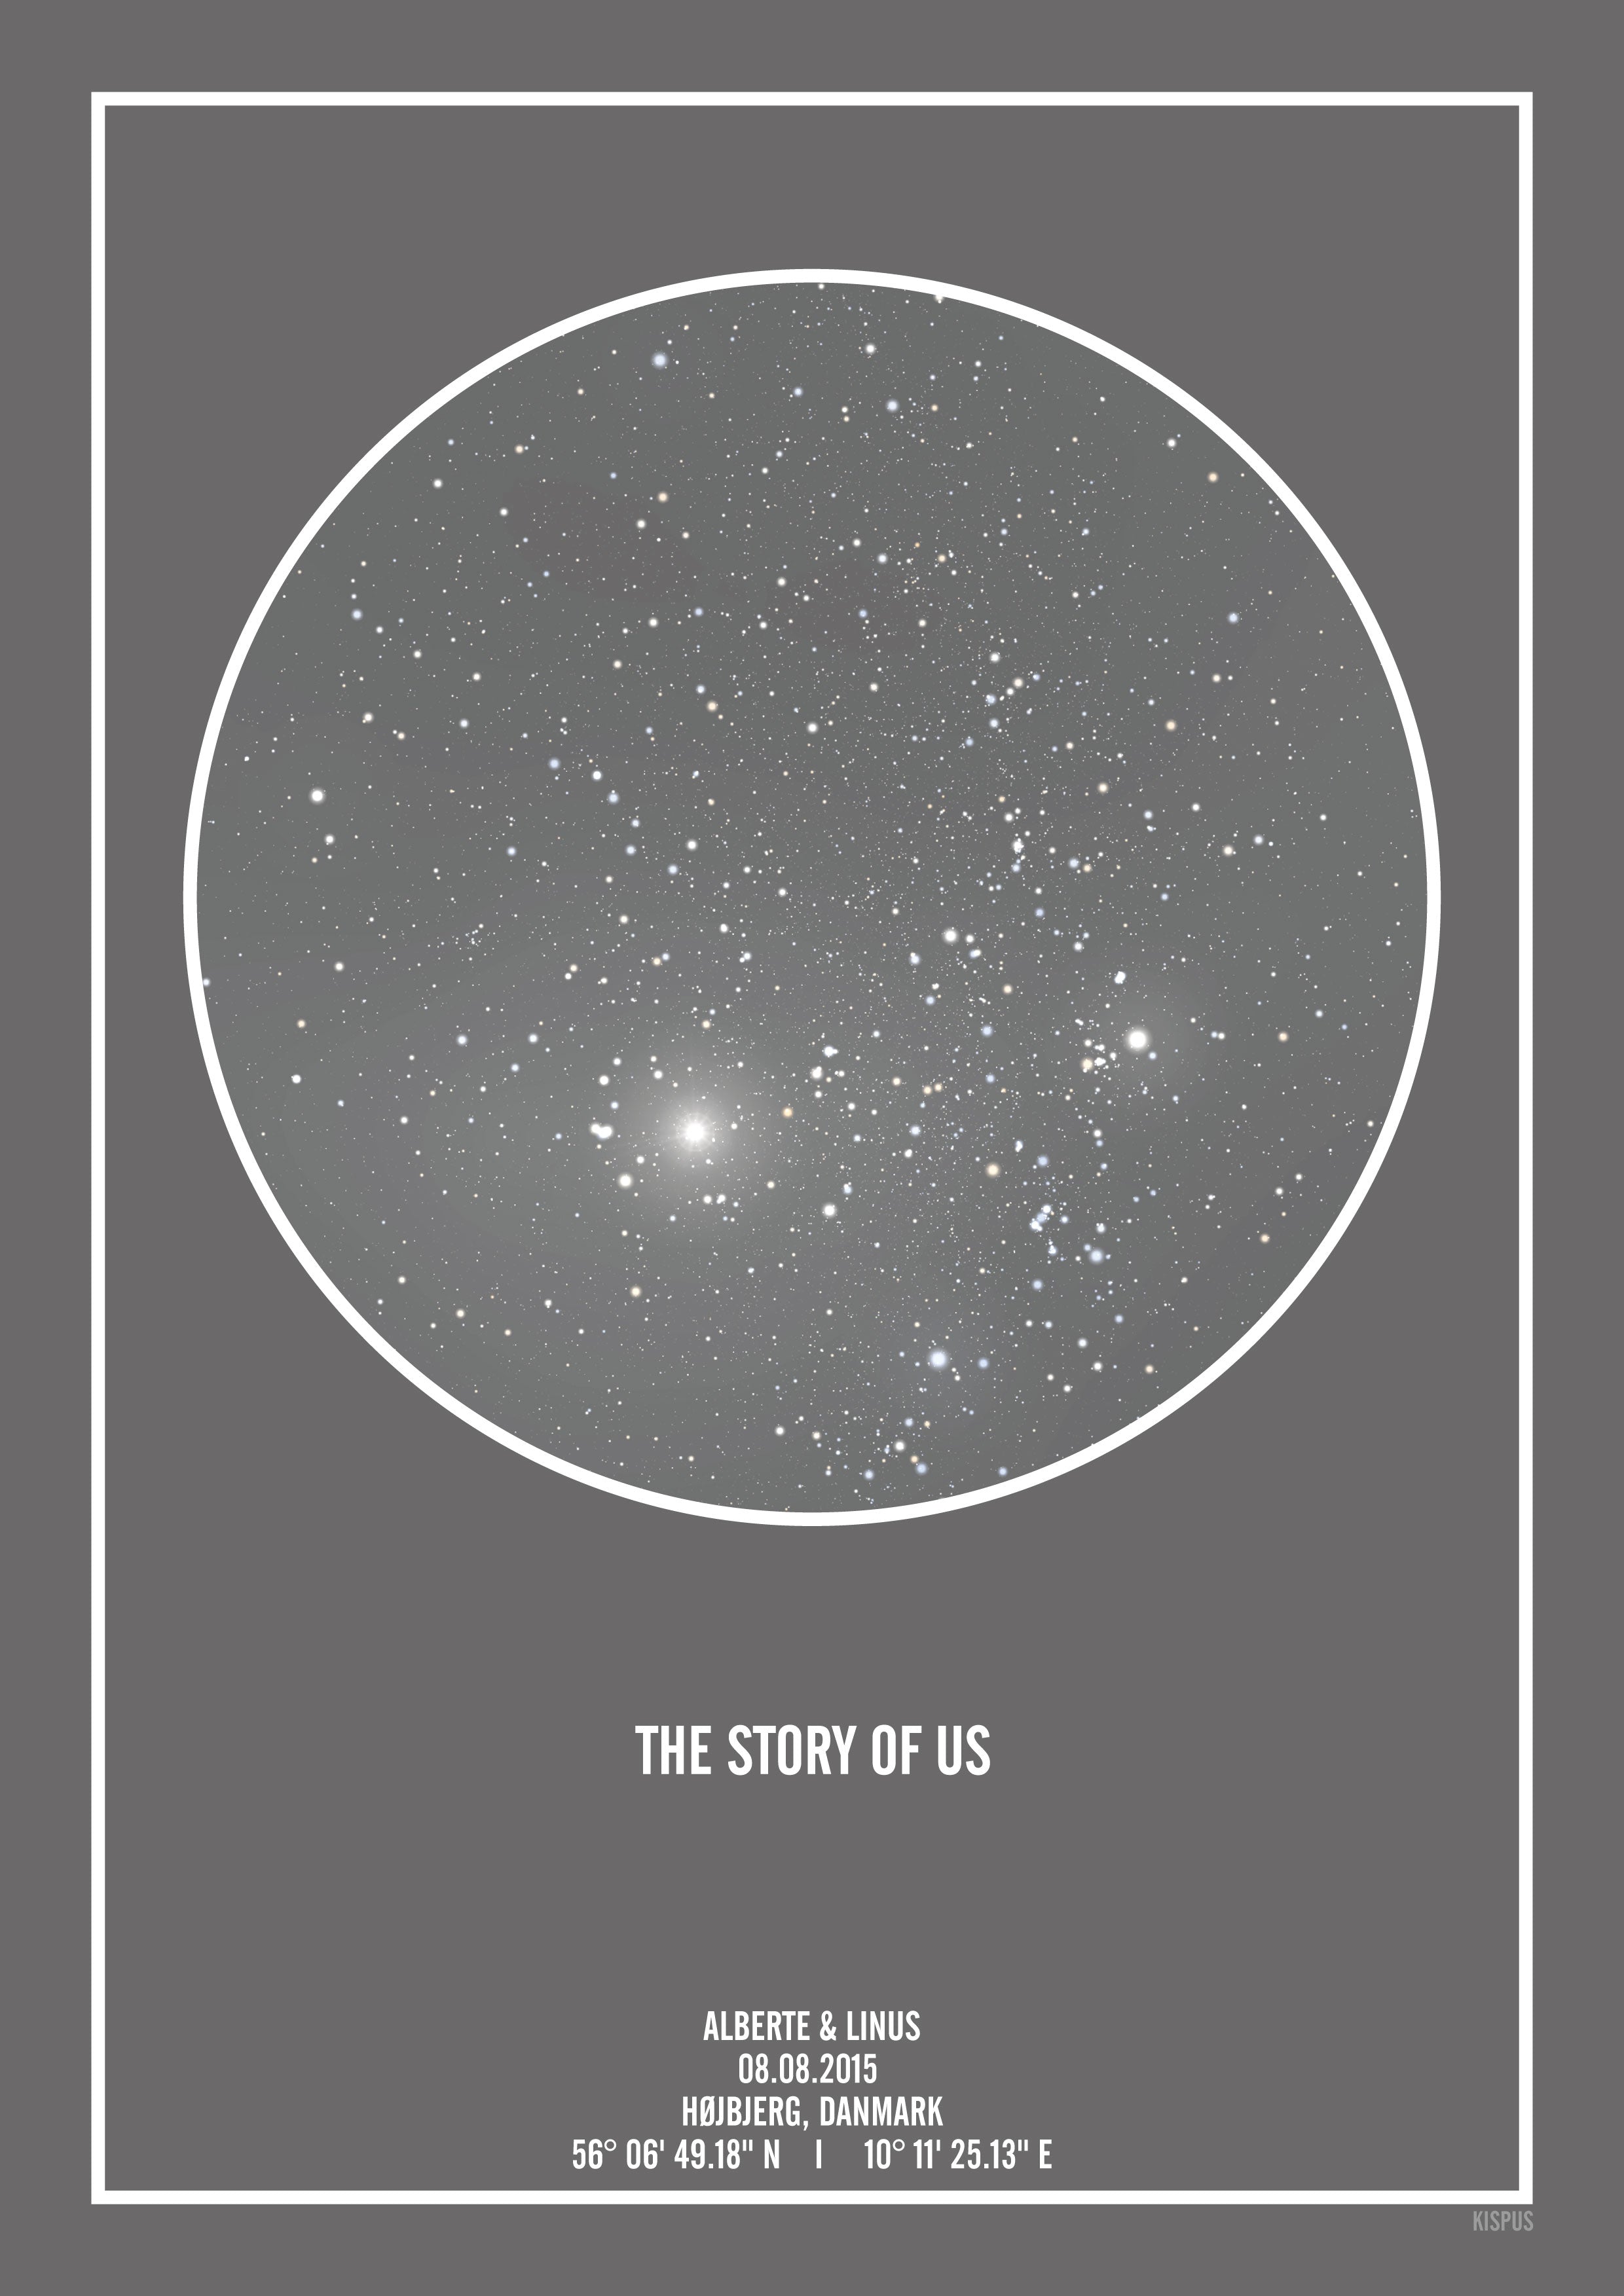 Se PERSONLIG STJERNEHIMMEL PLAKAT (MØRKEGRÅ) - A4 / Hvid tekst + grå stjernehimmel / Klar stjernehimmel hos KISPUS